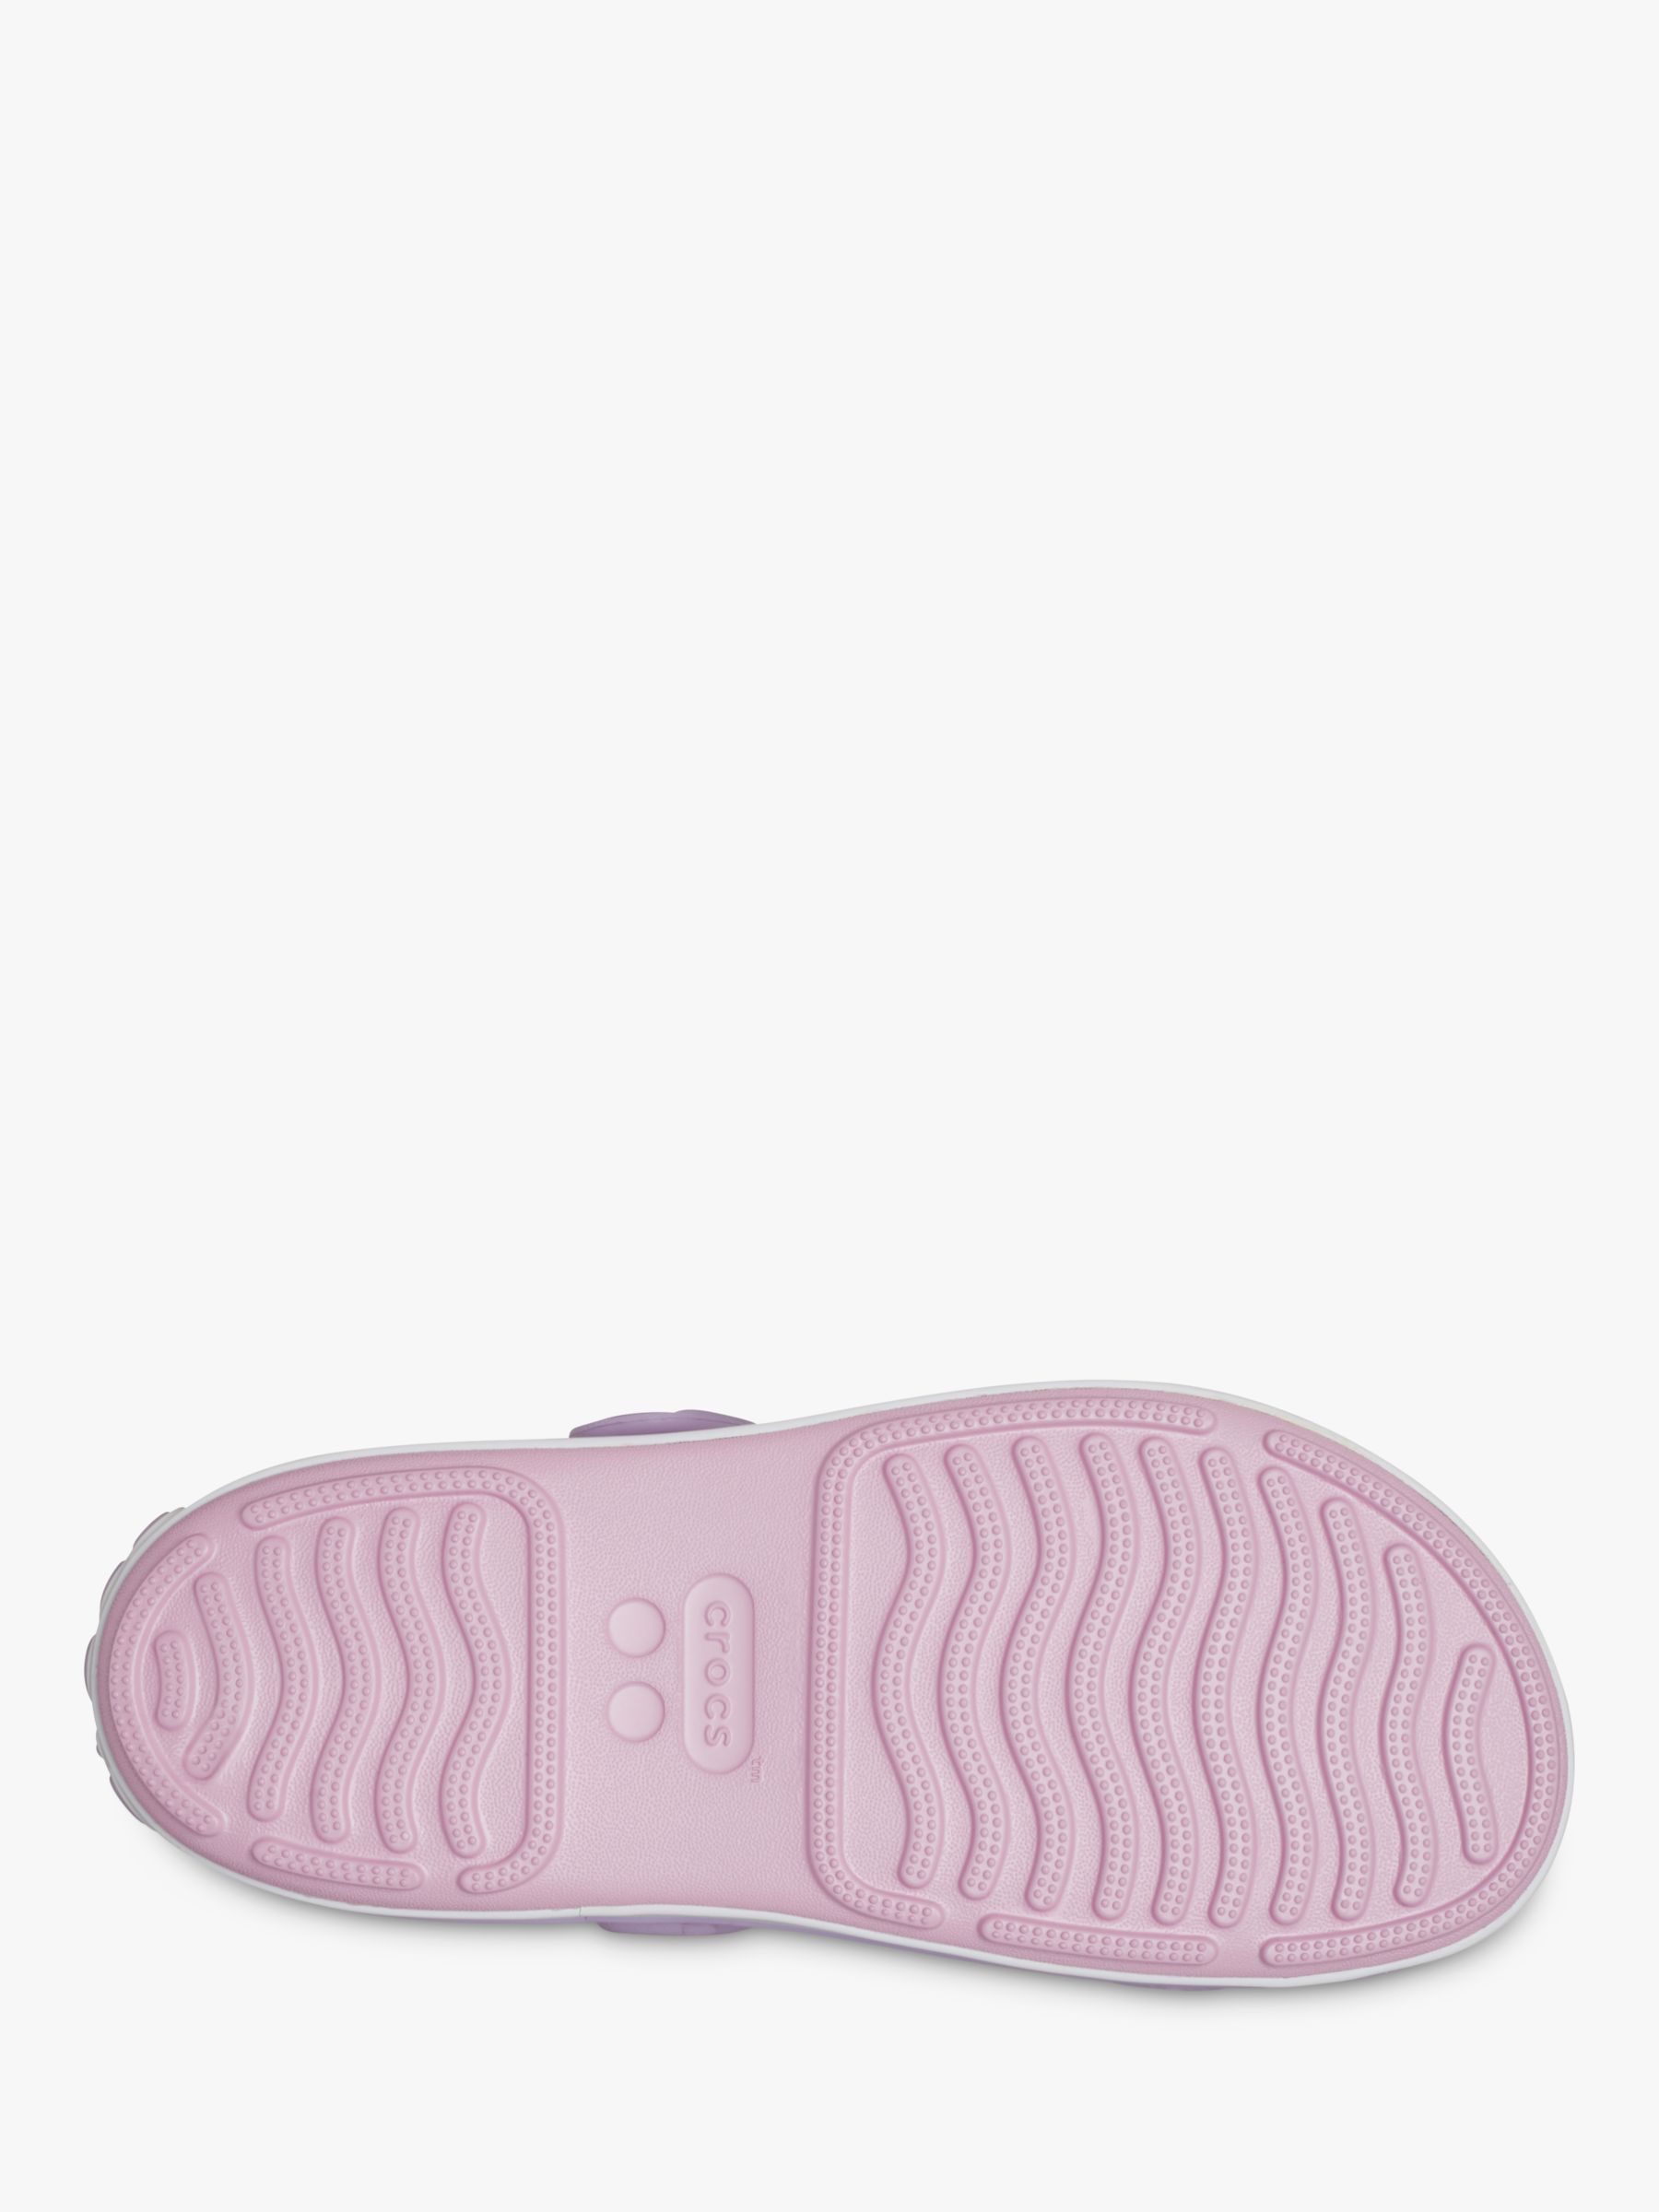 Crocs Kids' Crocband™ Cruiser Sandals, Pink/Lilac, 8 Jnr